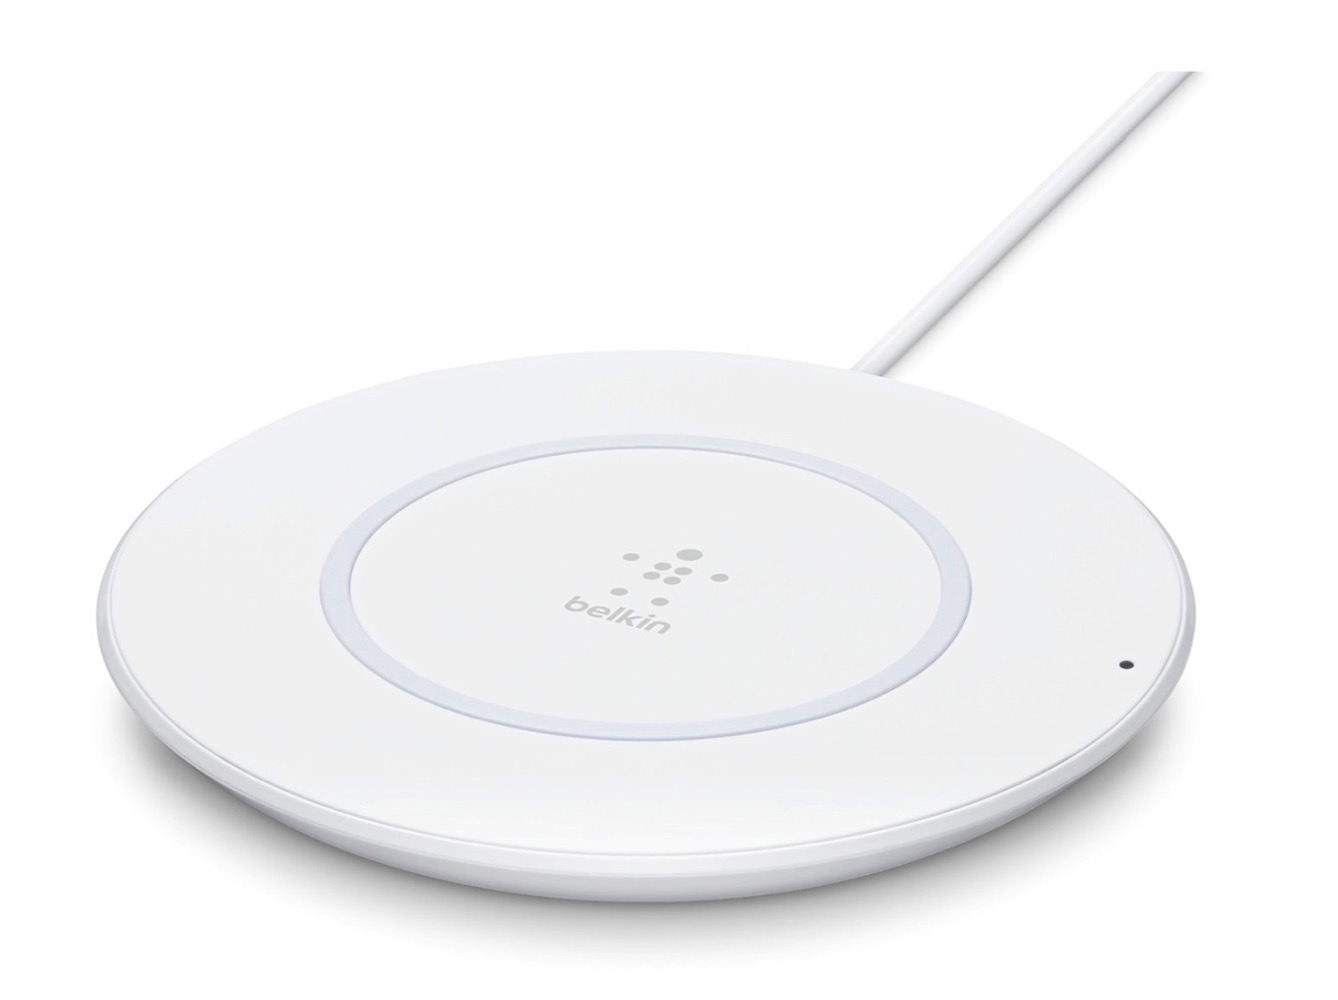 Apple公式サイト、「iPhone X/8」の高速充電に対応ワイヤレス充電器「Belkin Boost Up Wireless Charging Pad」の販売開始